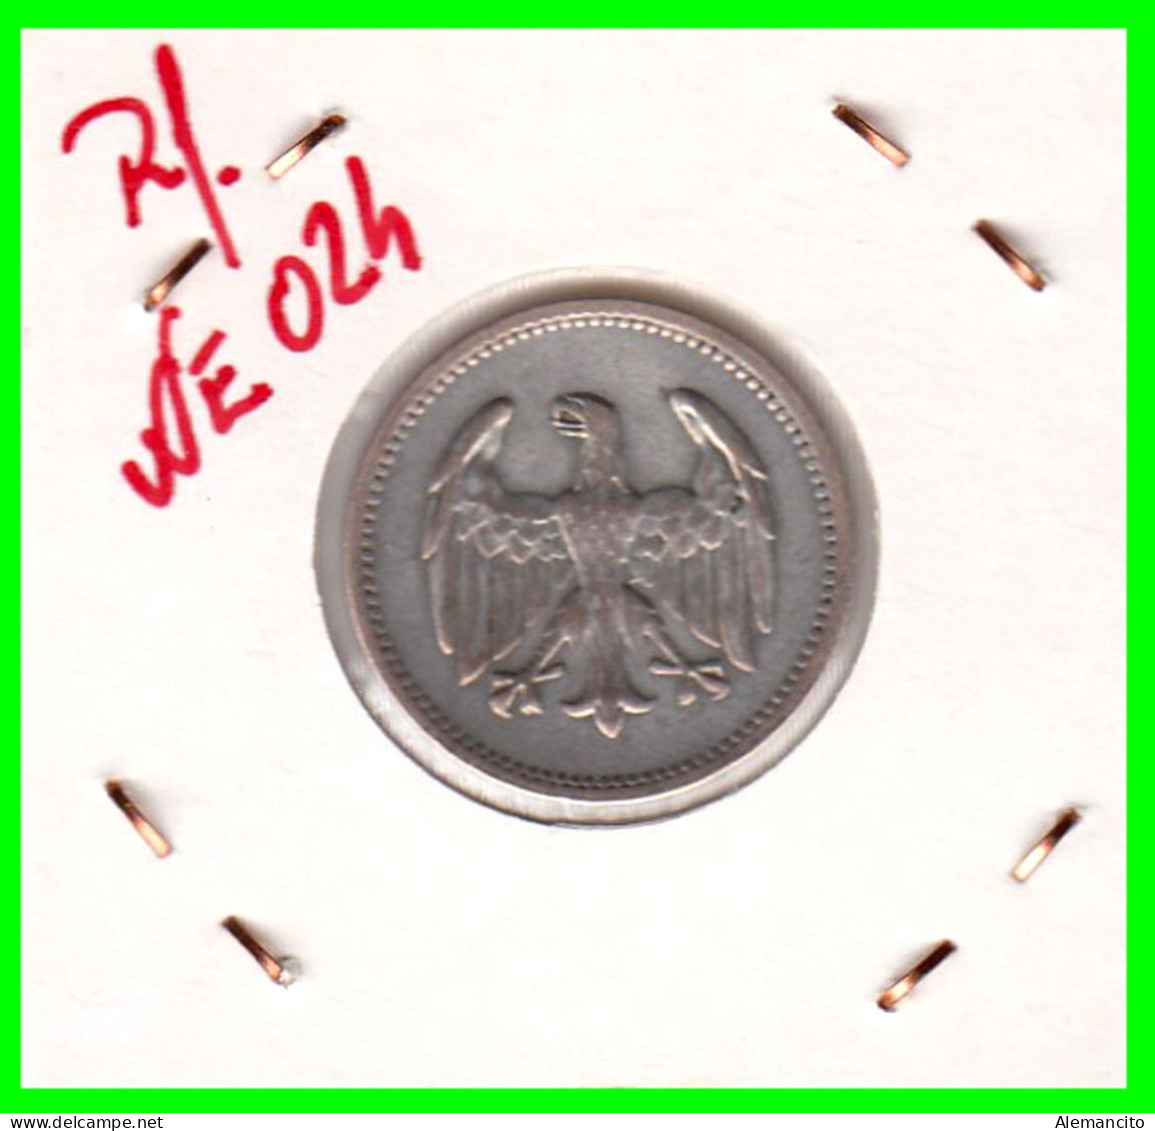 GERMANY REPÚBLICA DE WEIMAR 1 MARK ( 1924 CECA - A )  ( REICHSMARK KM # 42 ) - 1 Marco & 1 Reichsmark